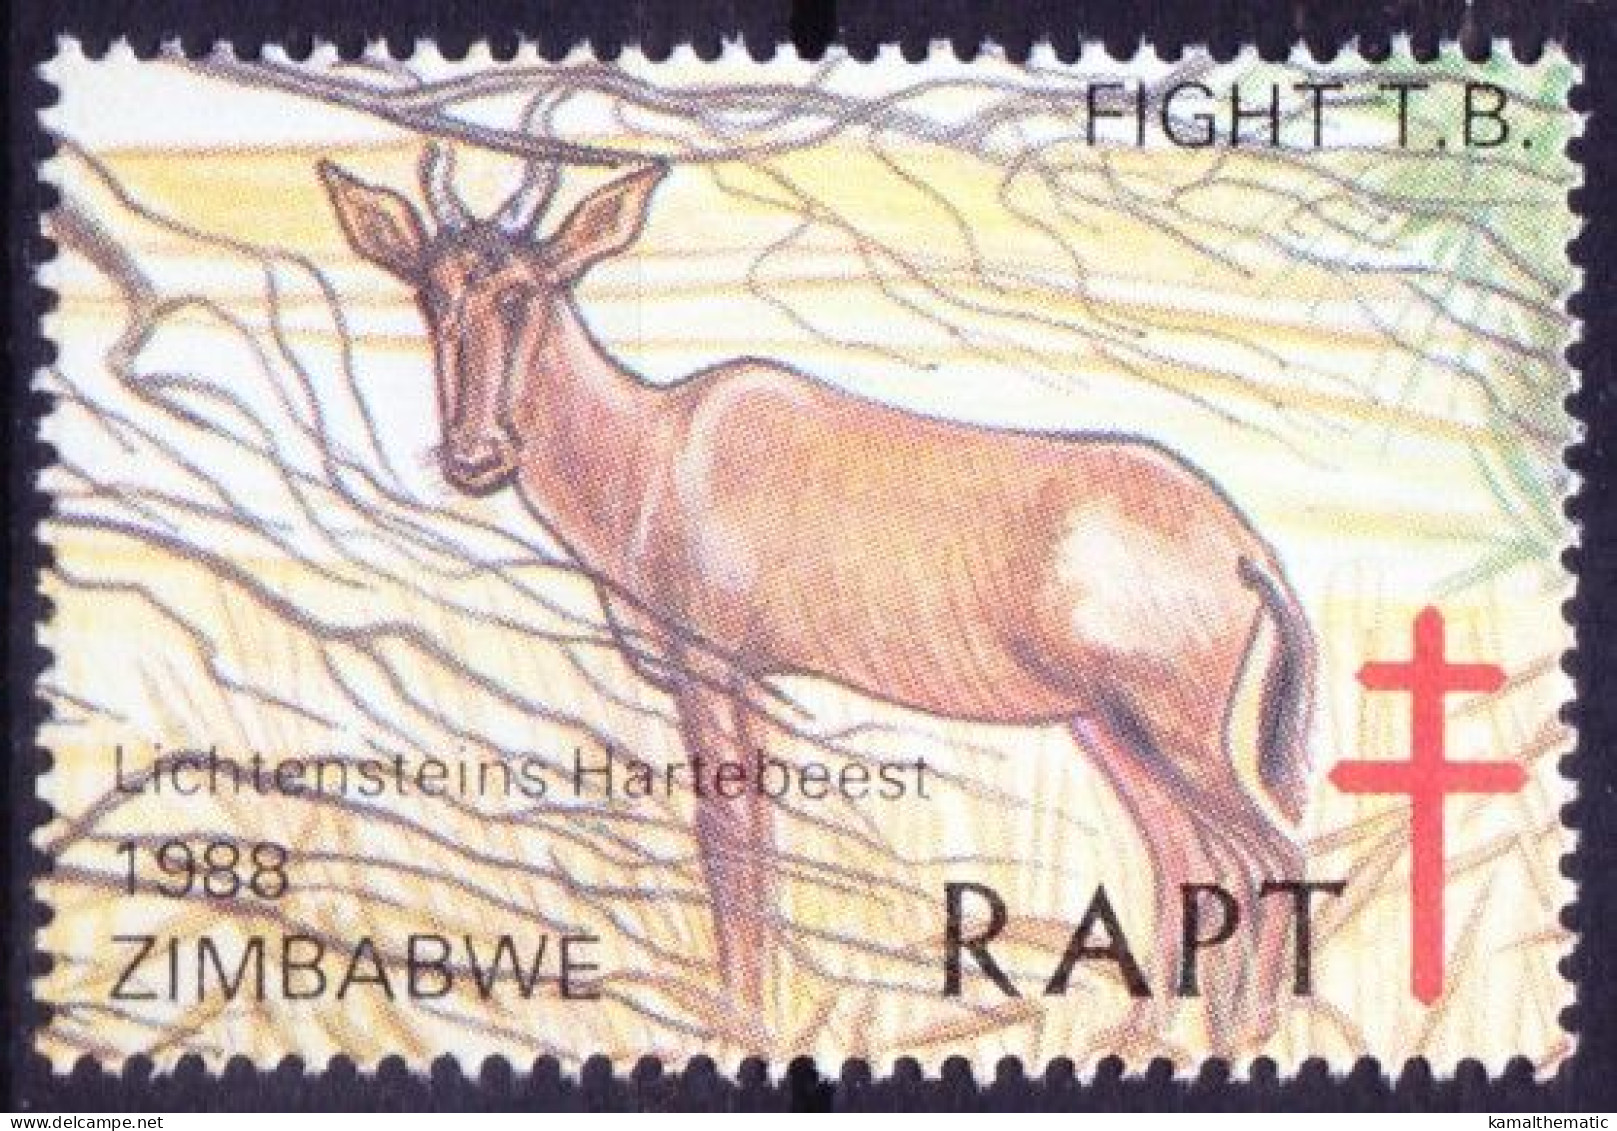 Zimbabwe 1978 MNH, Lichtensteins Hartebeest Deer Animals, Help Fight TB, Seals Medical Disease - Disease